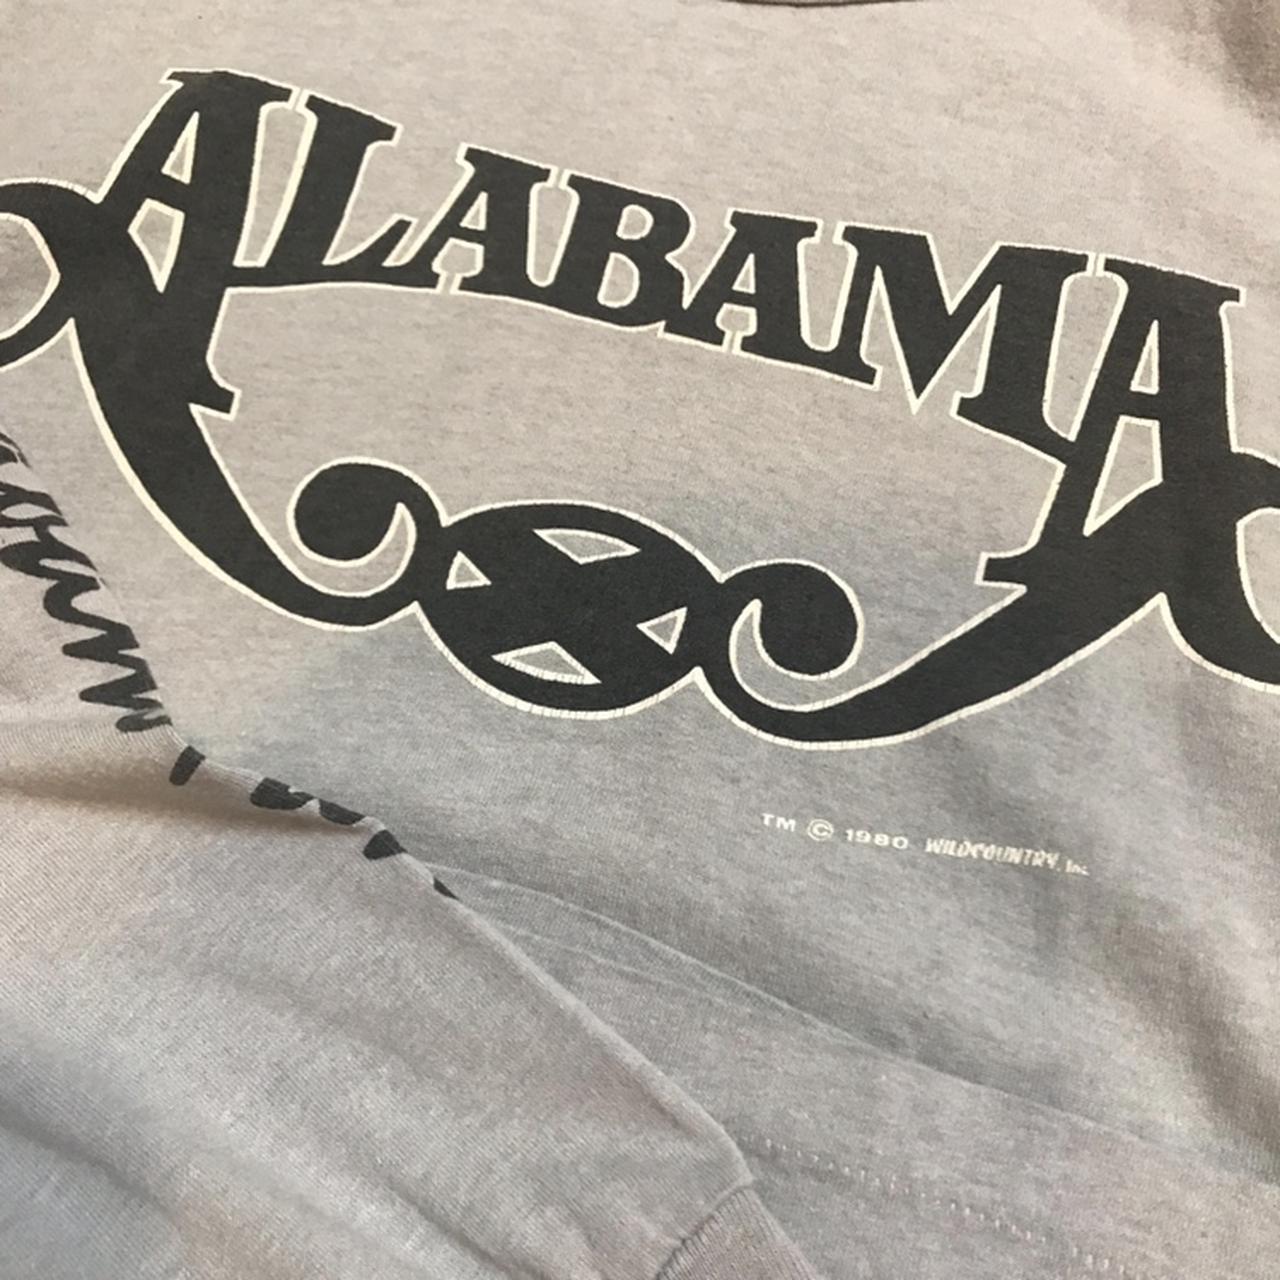 Vintage 1985 Alabama 40 hour week long sleeve tour